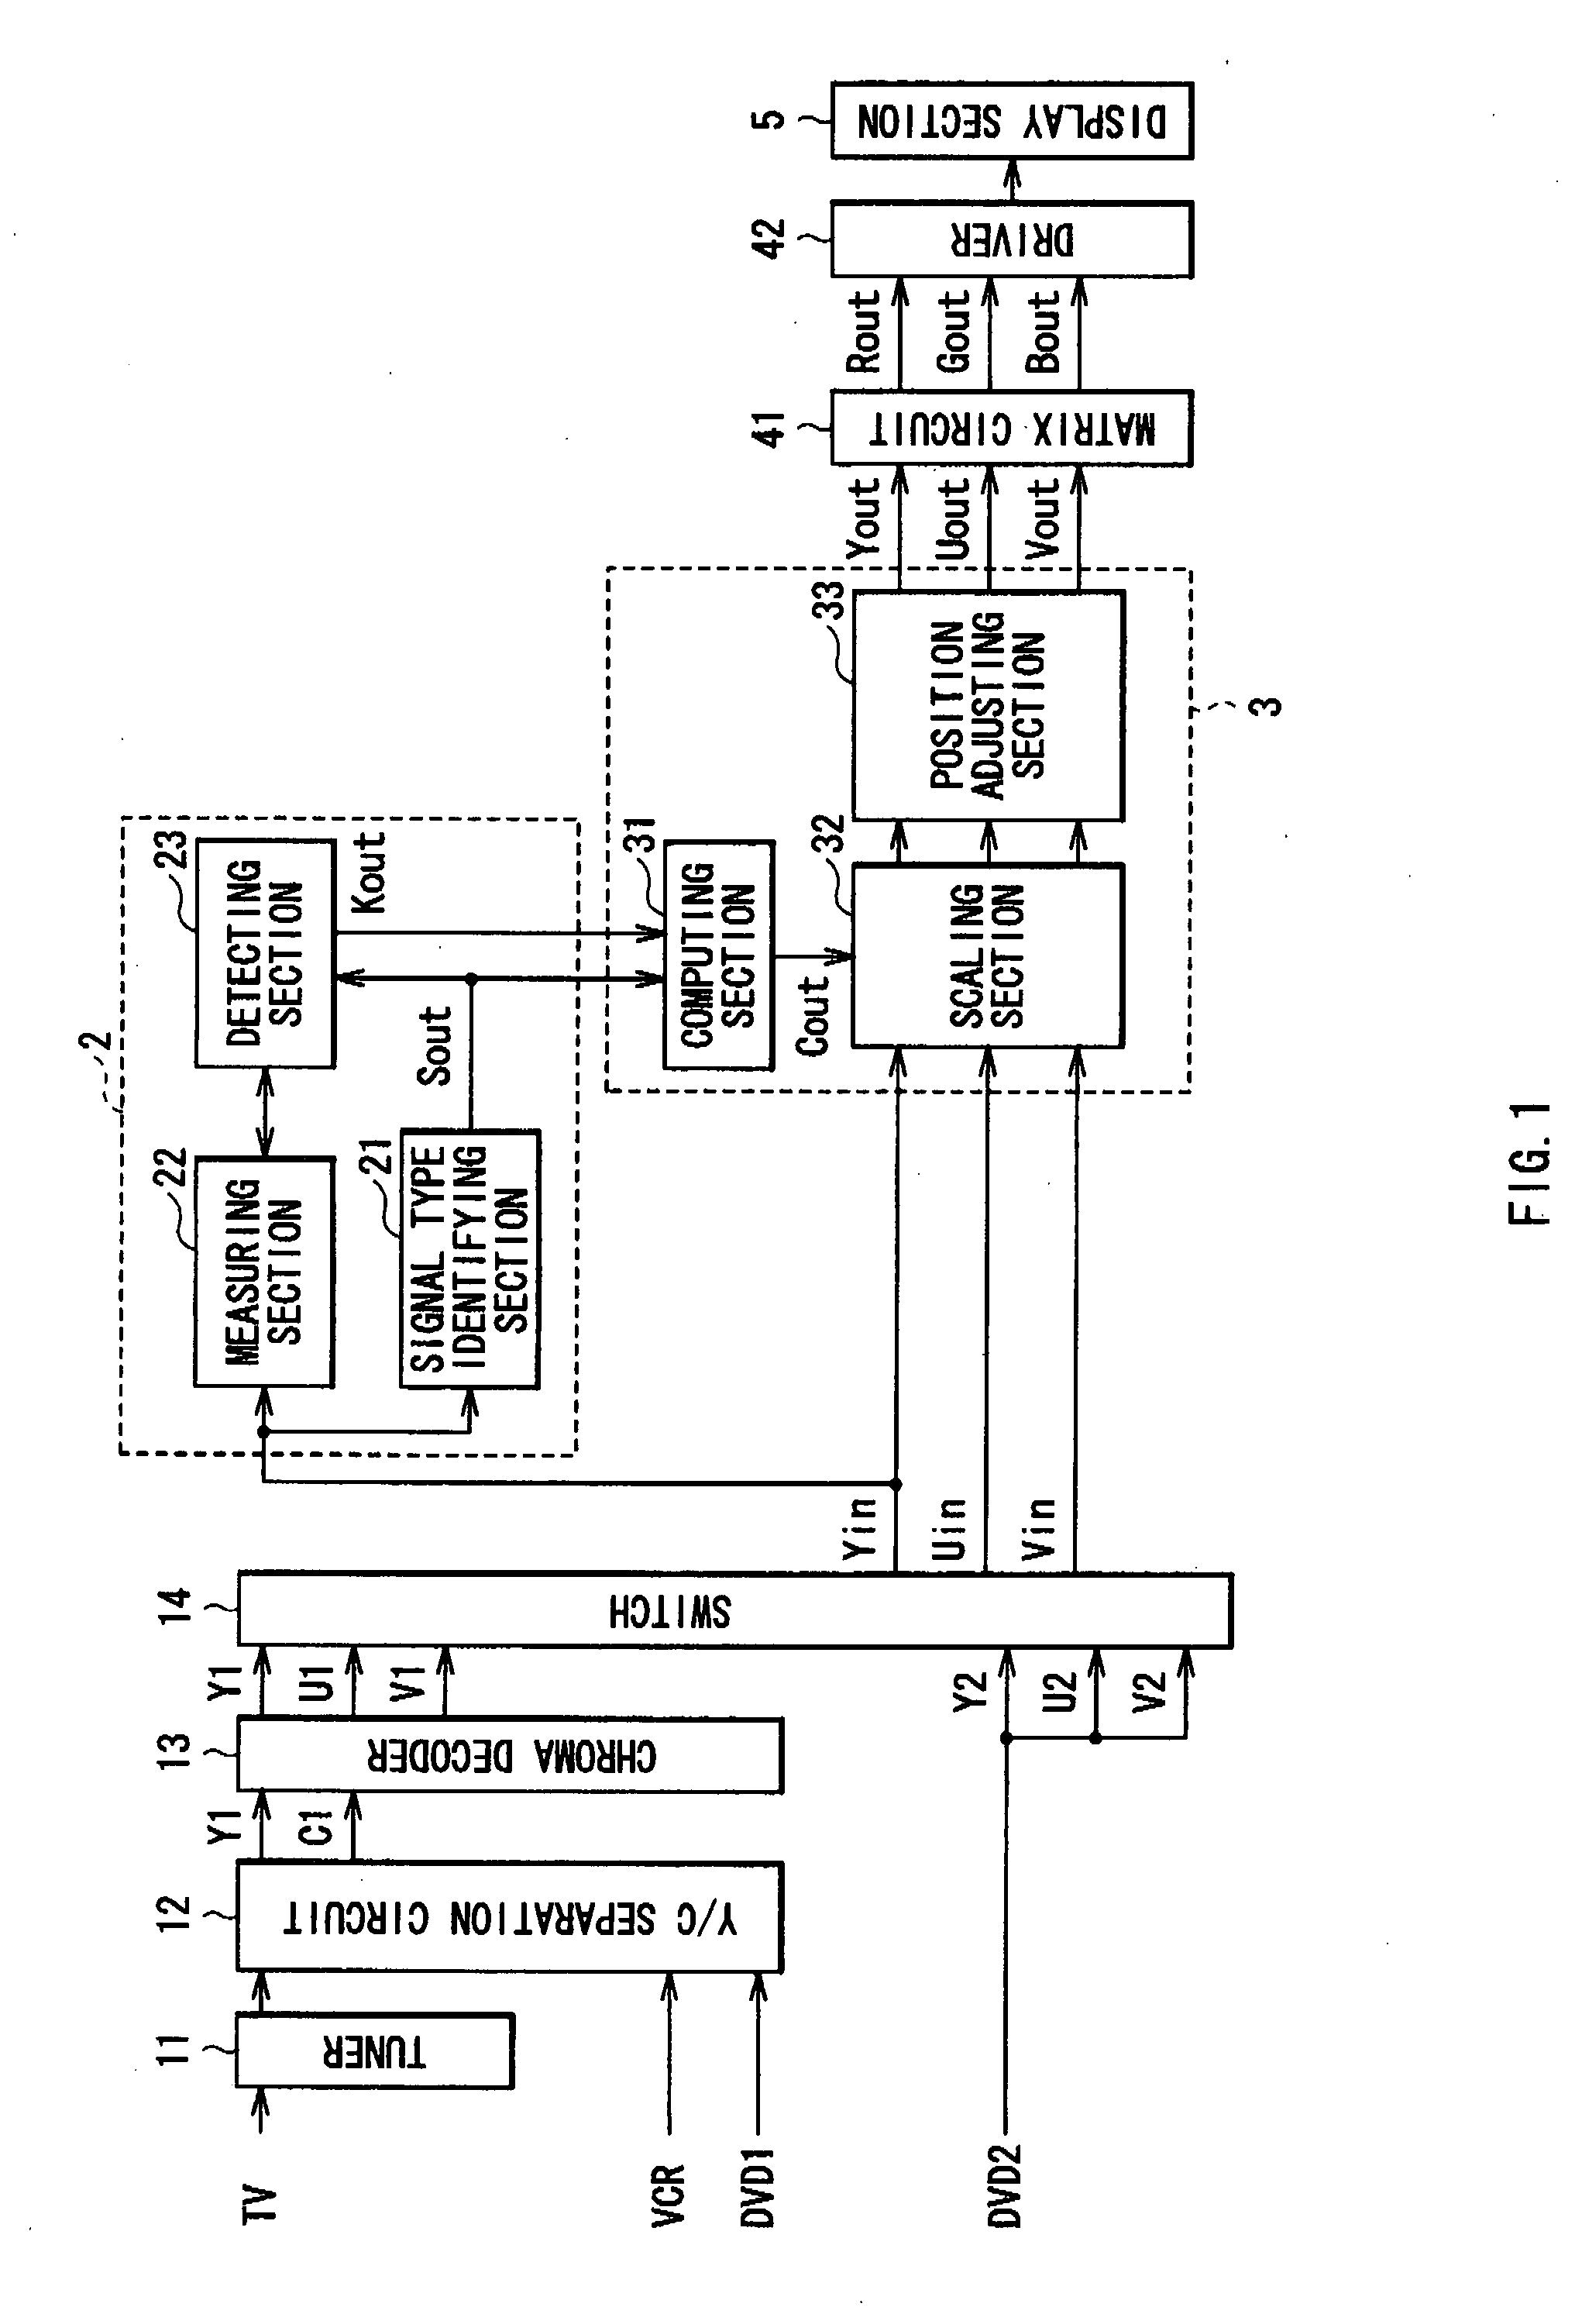 Image signal processing apparatus, image display and image display method